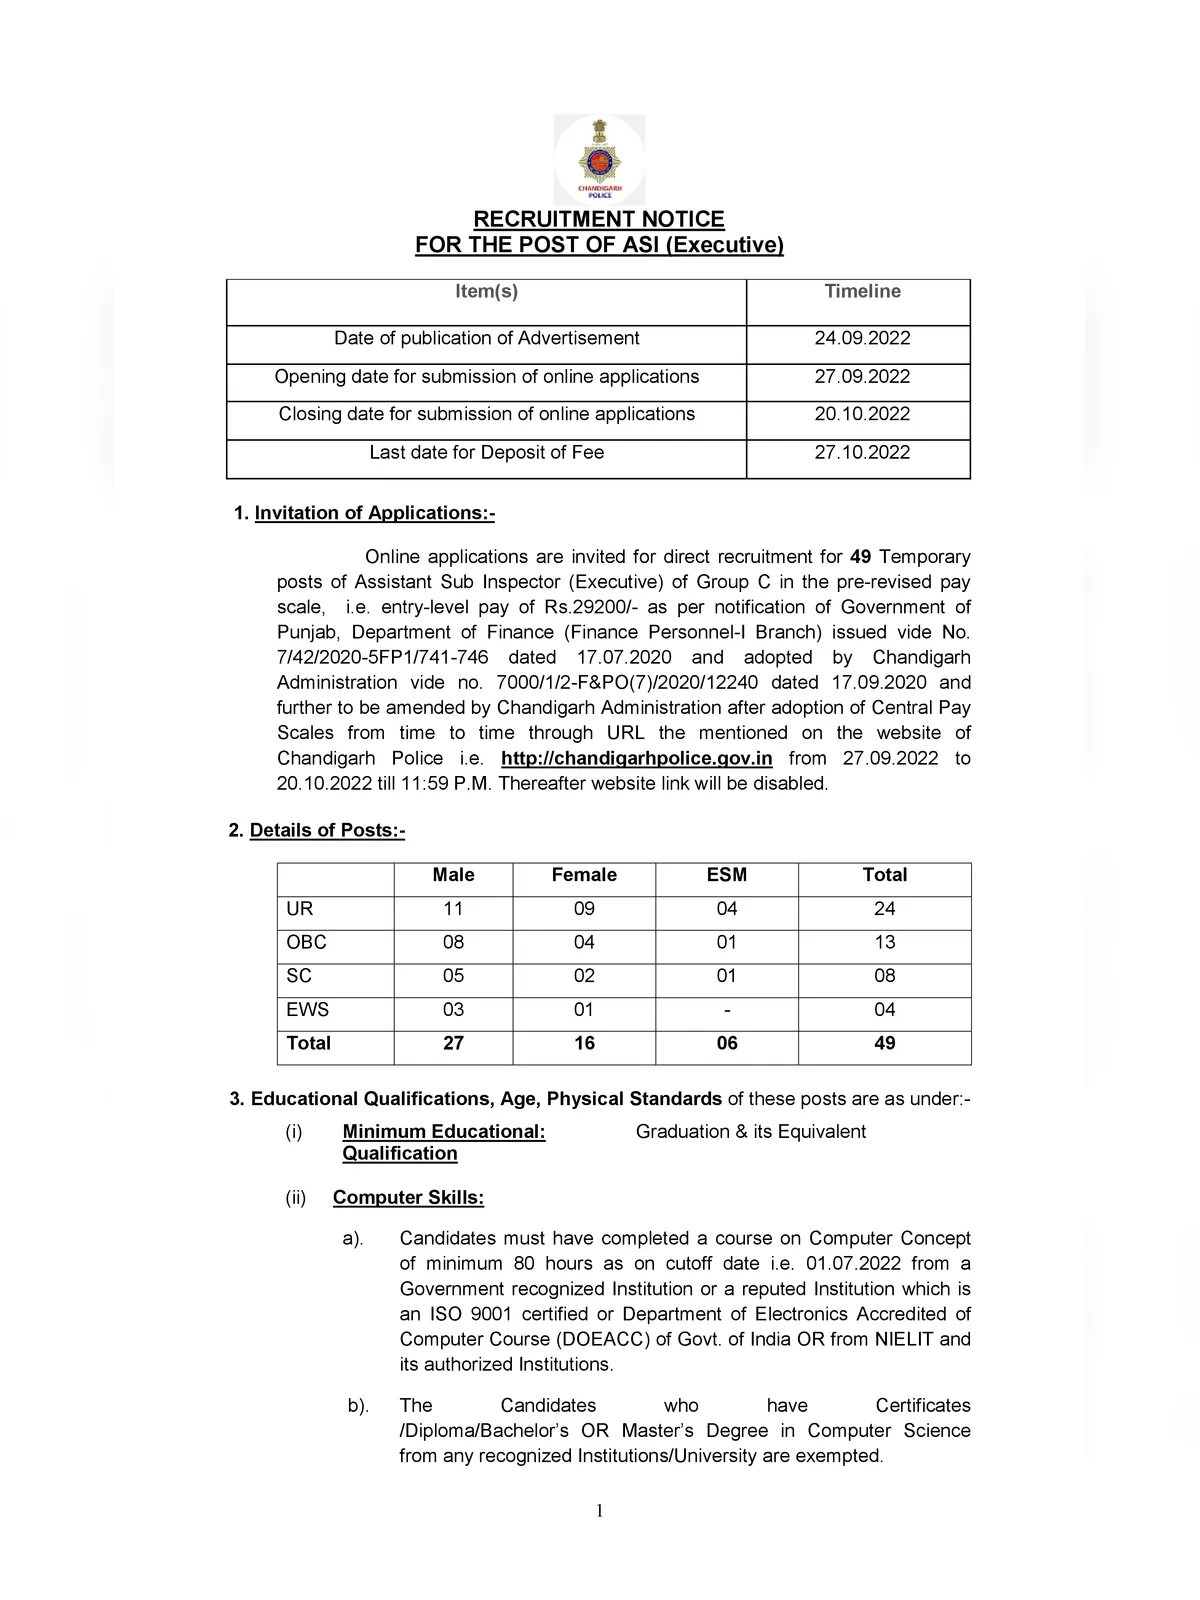 Chandigarh Police ASI Recruitment 2022 Notification